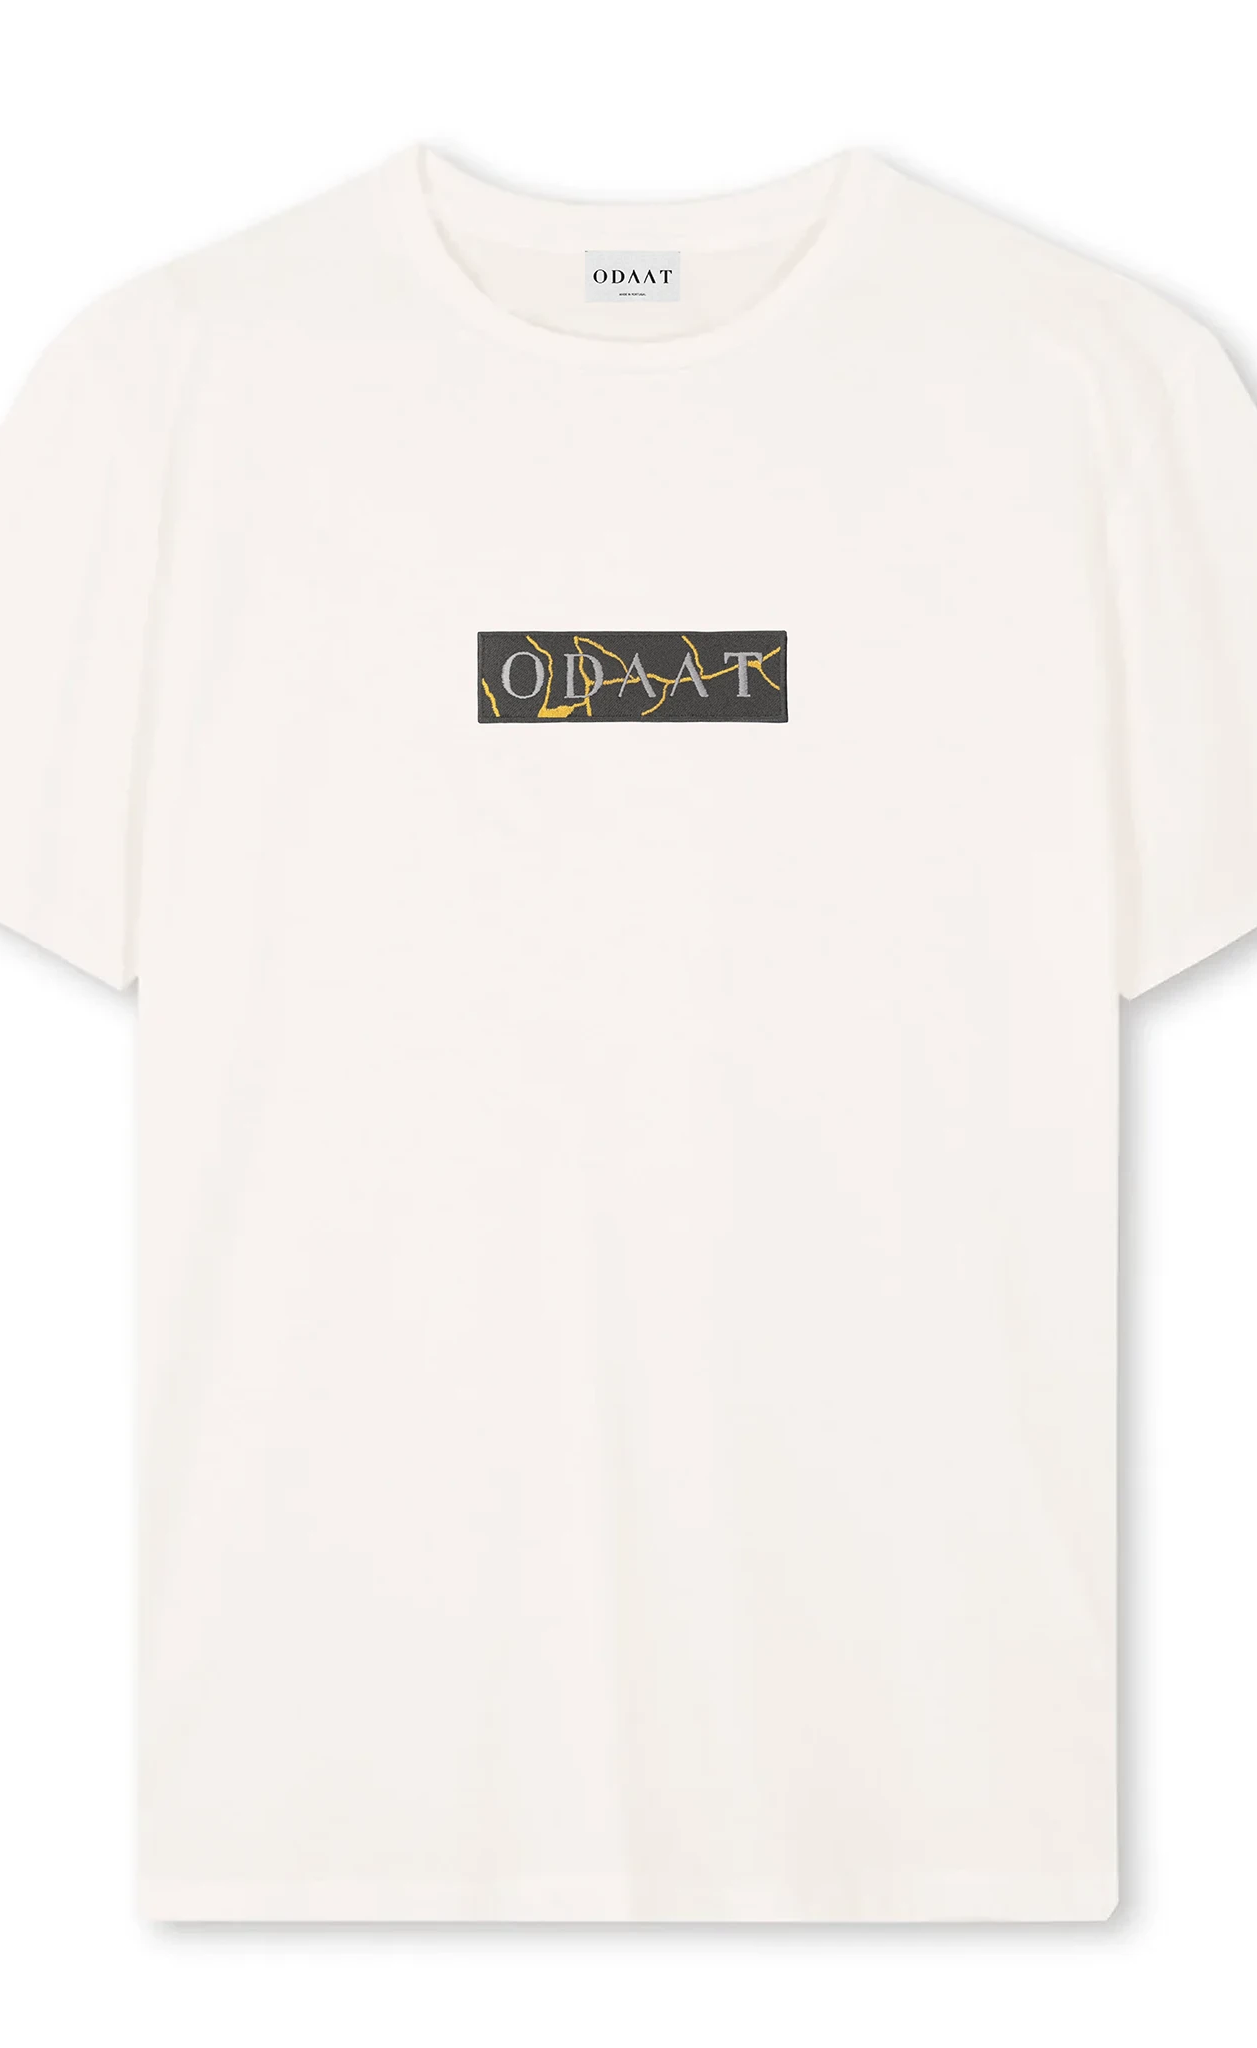 ODAAT Apparel, Golden Mend Kintsugi T-Shirt, Vintage White